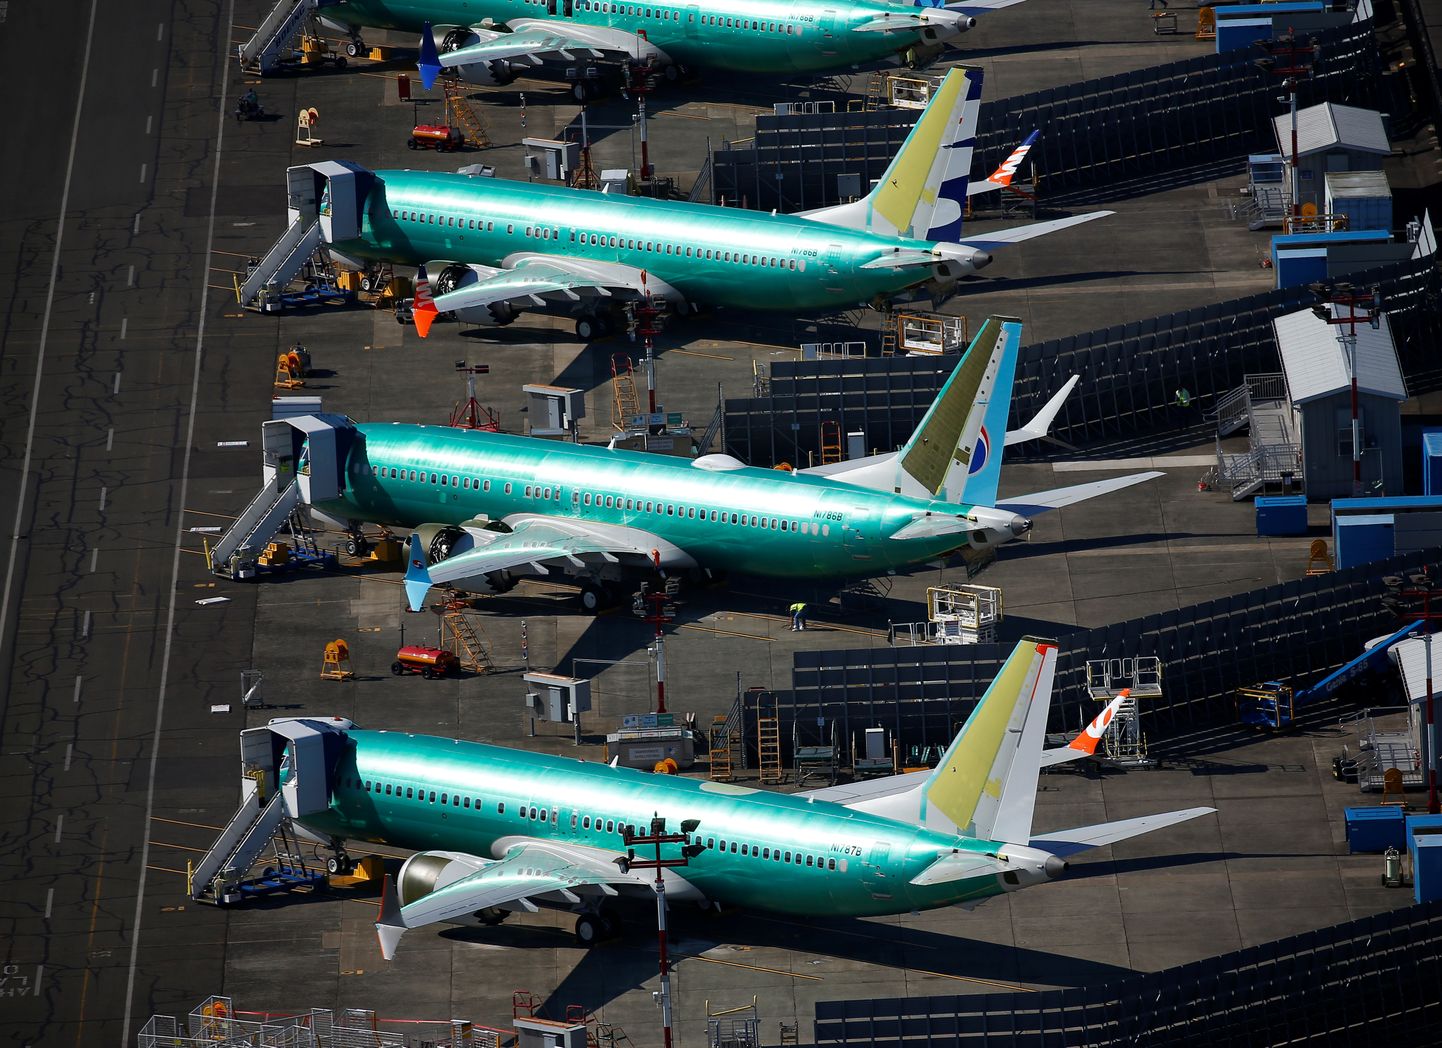 Boeing 737 MAX lennukid Rentoni munitsipaallennujaamas.